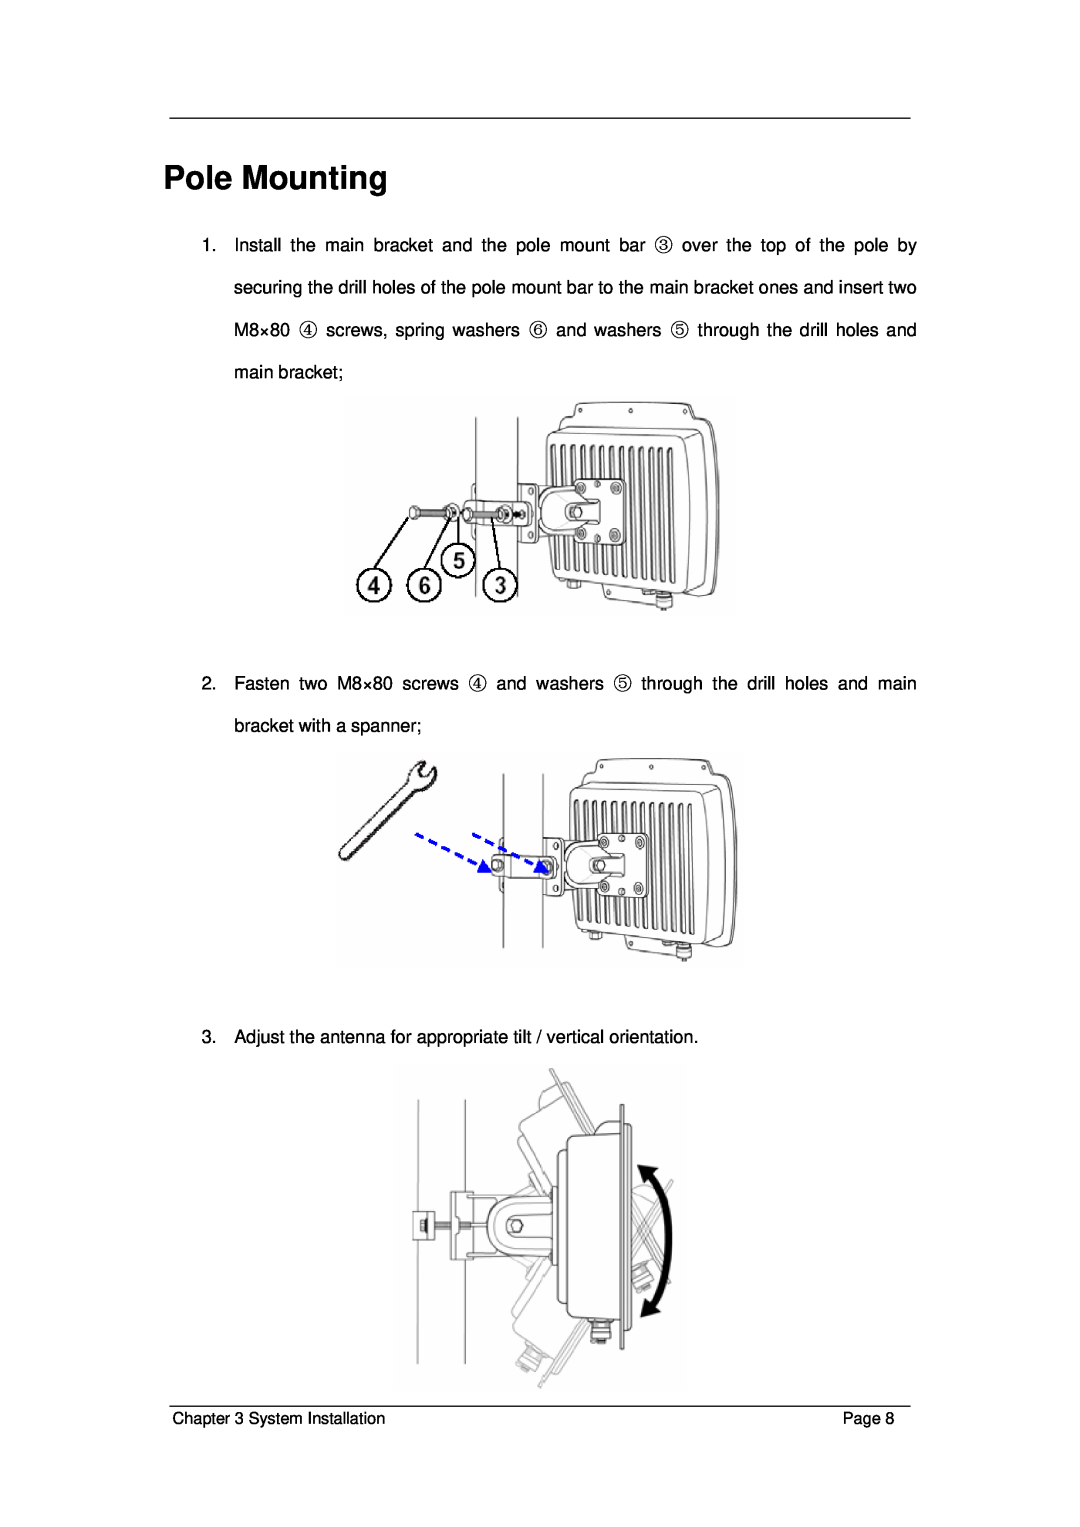 Z-Com R1 Extender manual Pole Mounting 